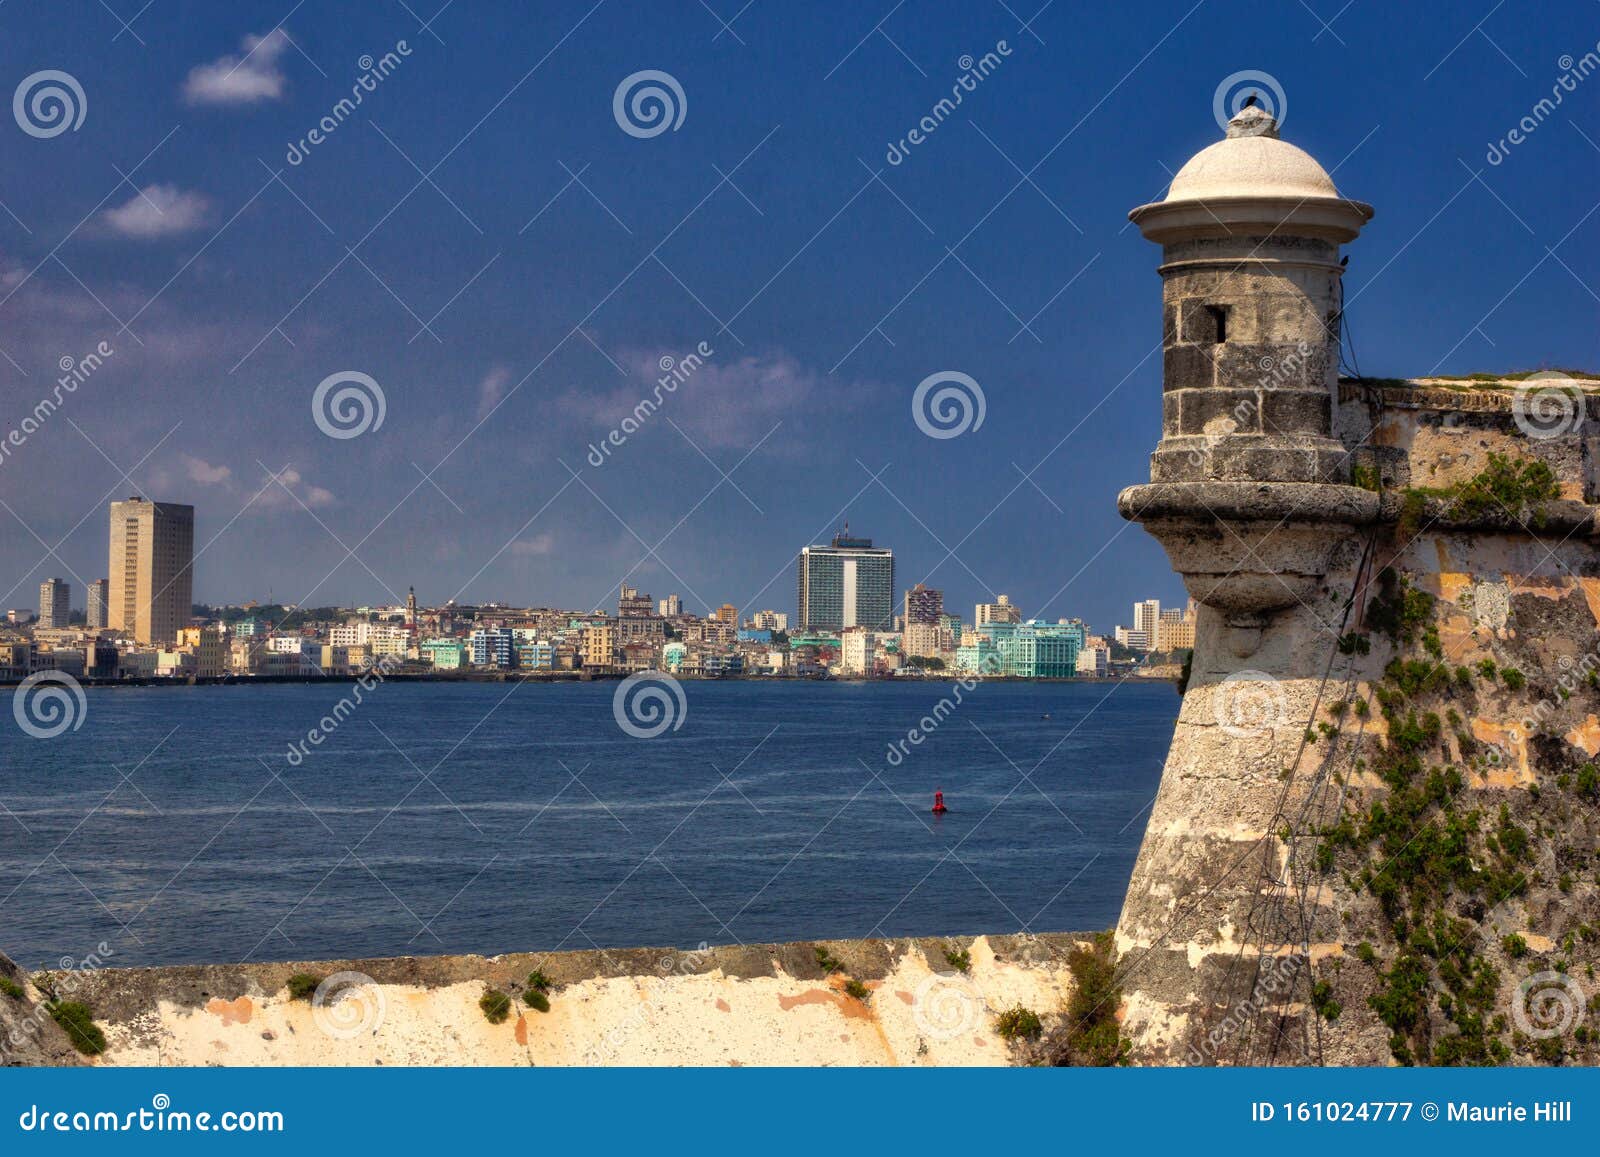 havana city across the harbour entrance from fortaleza